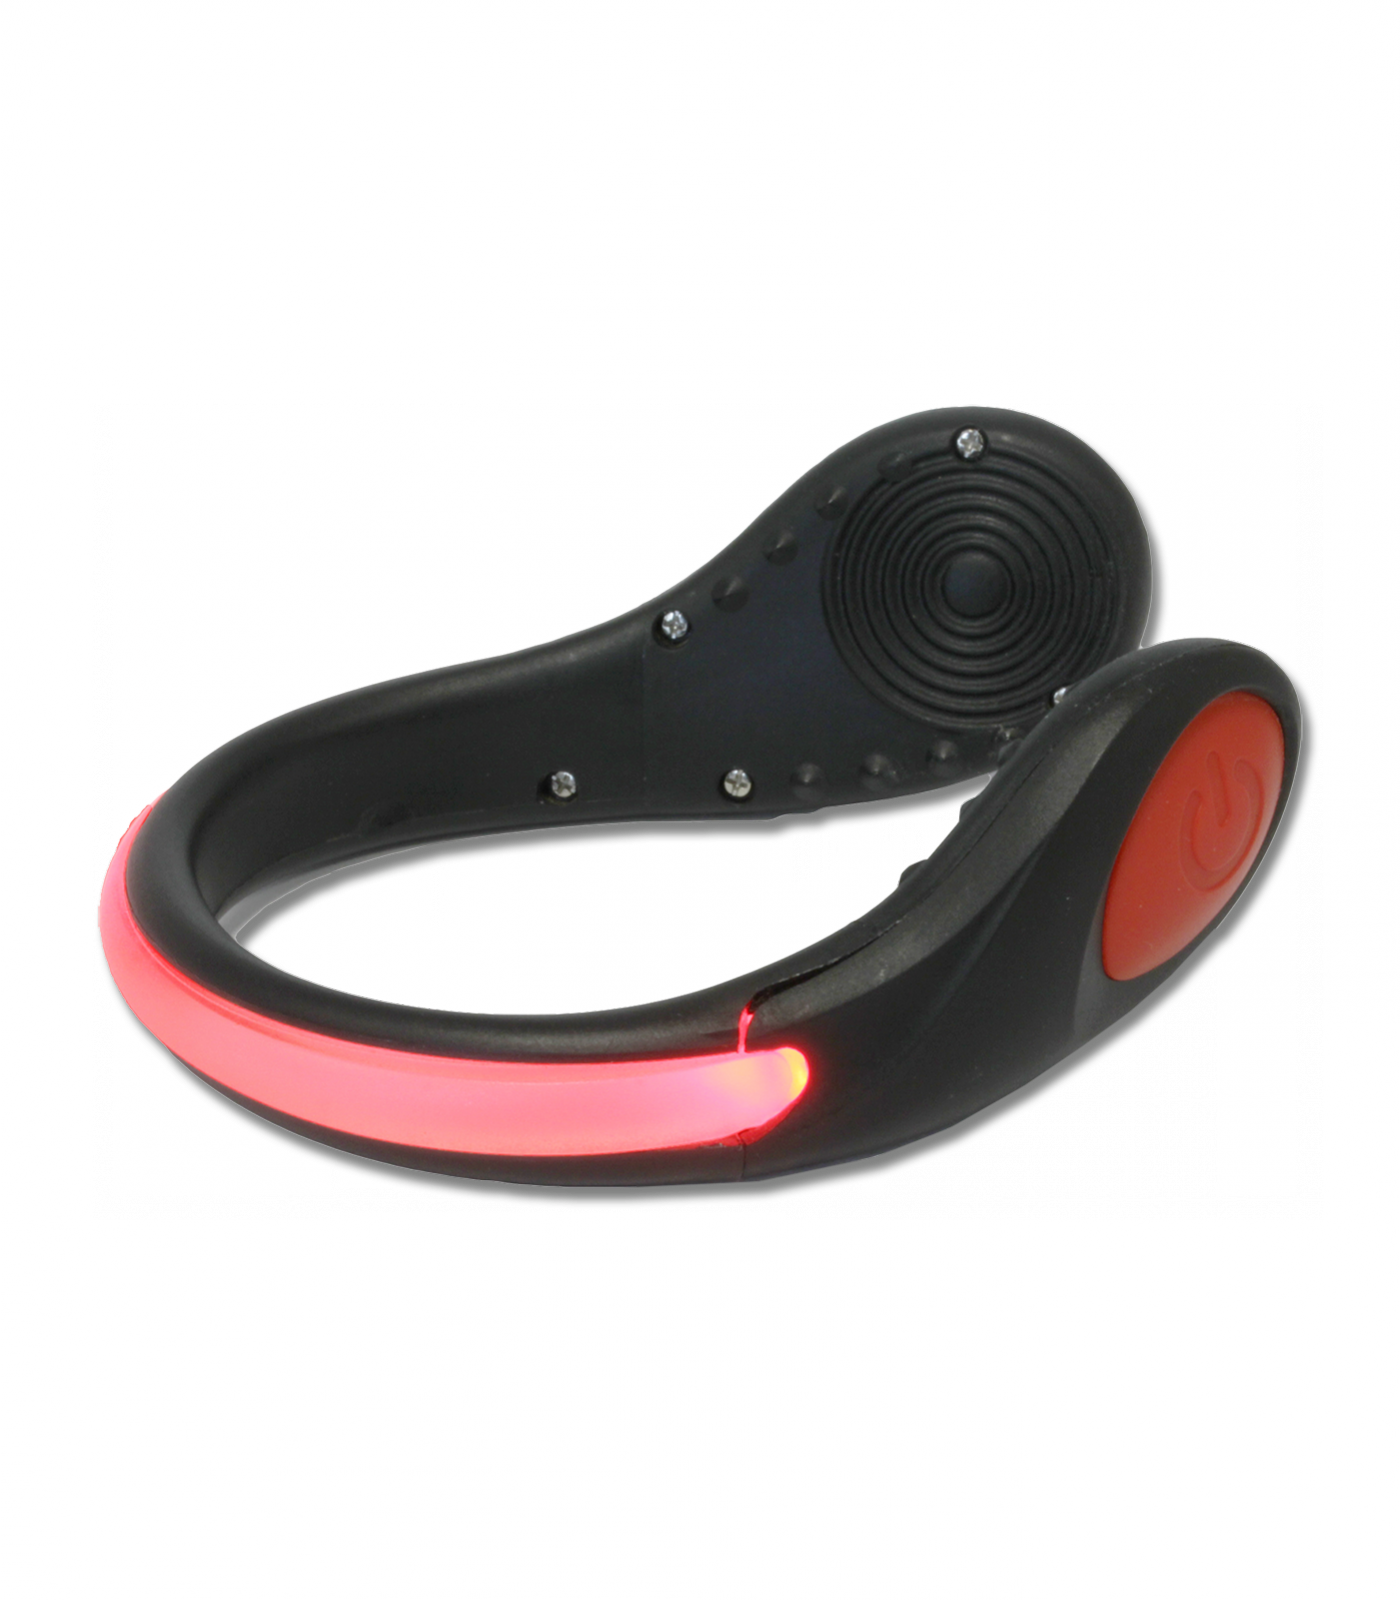 LED Reflektor Schuh-Clip